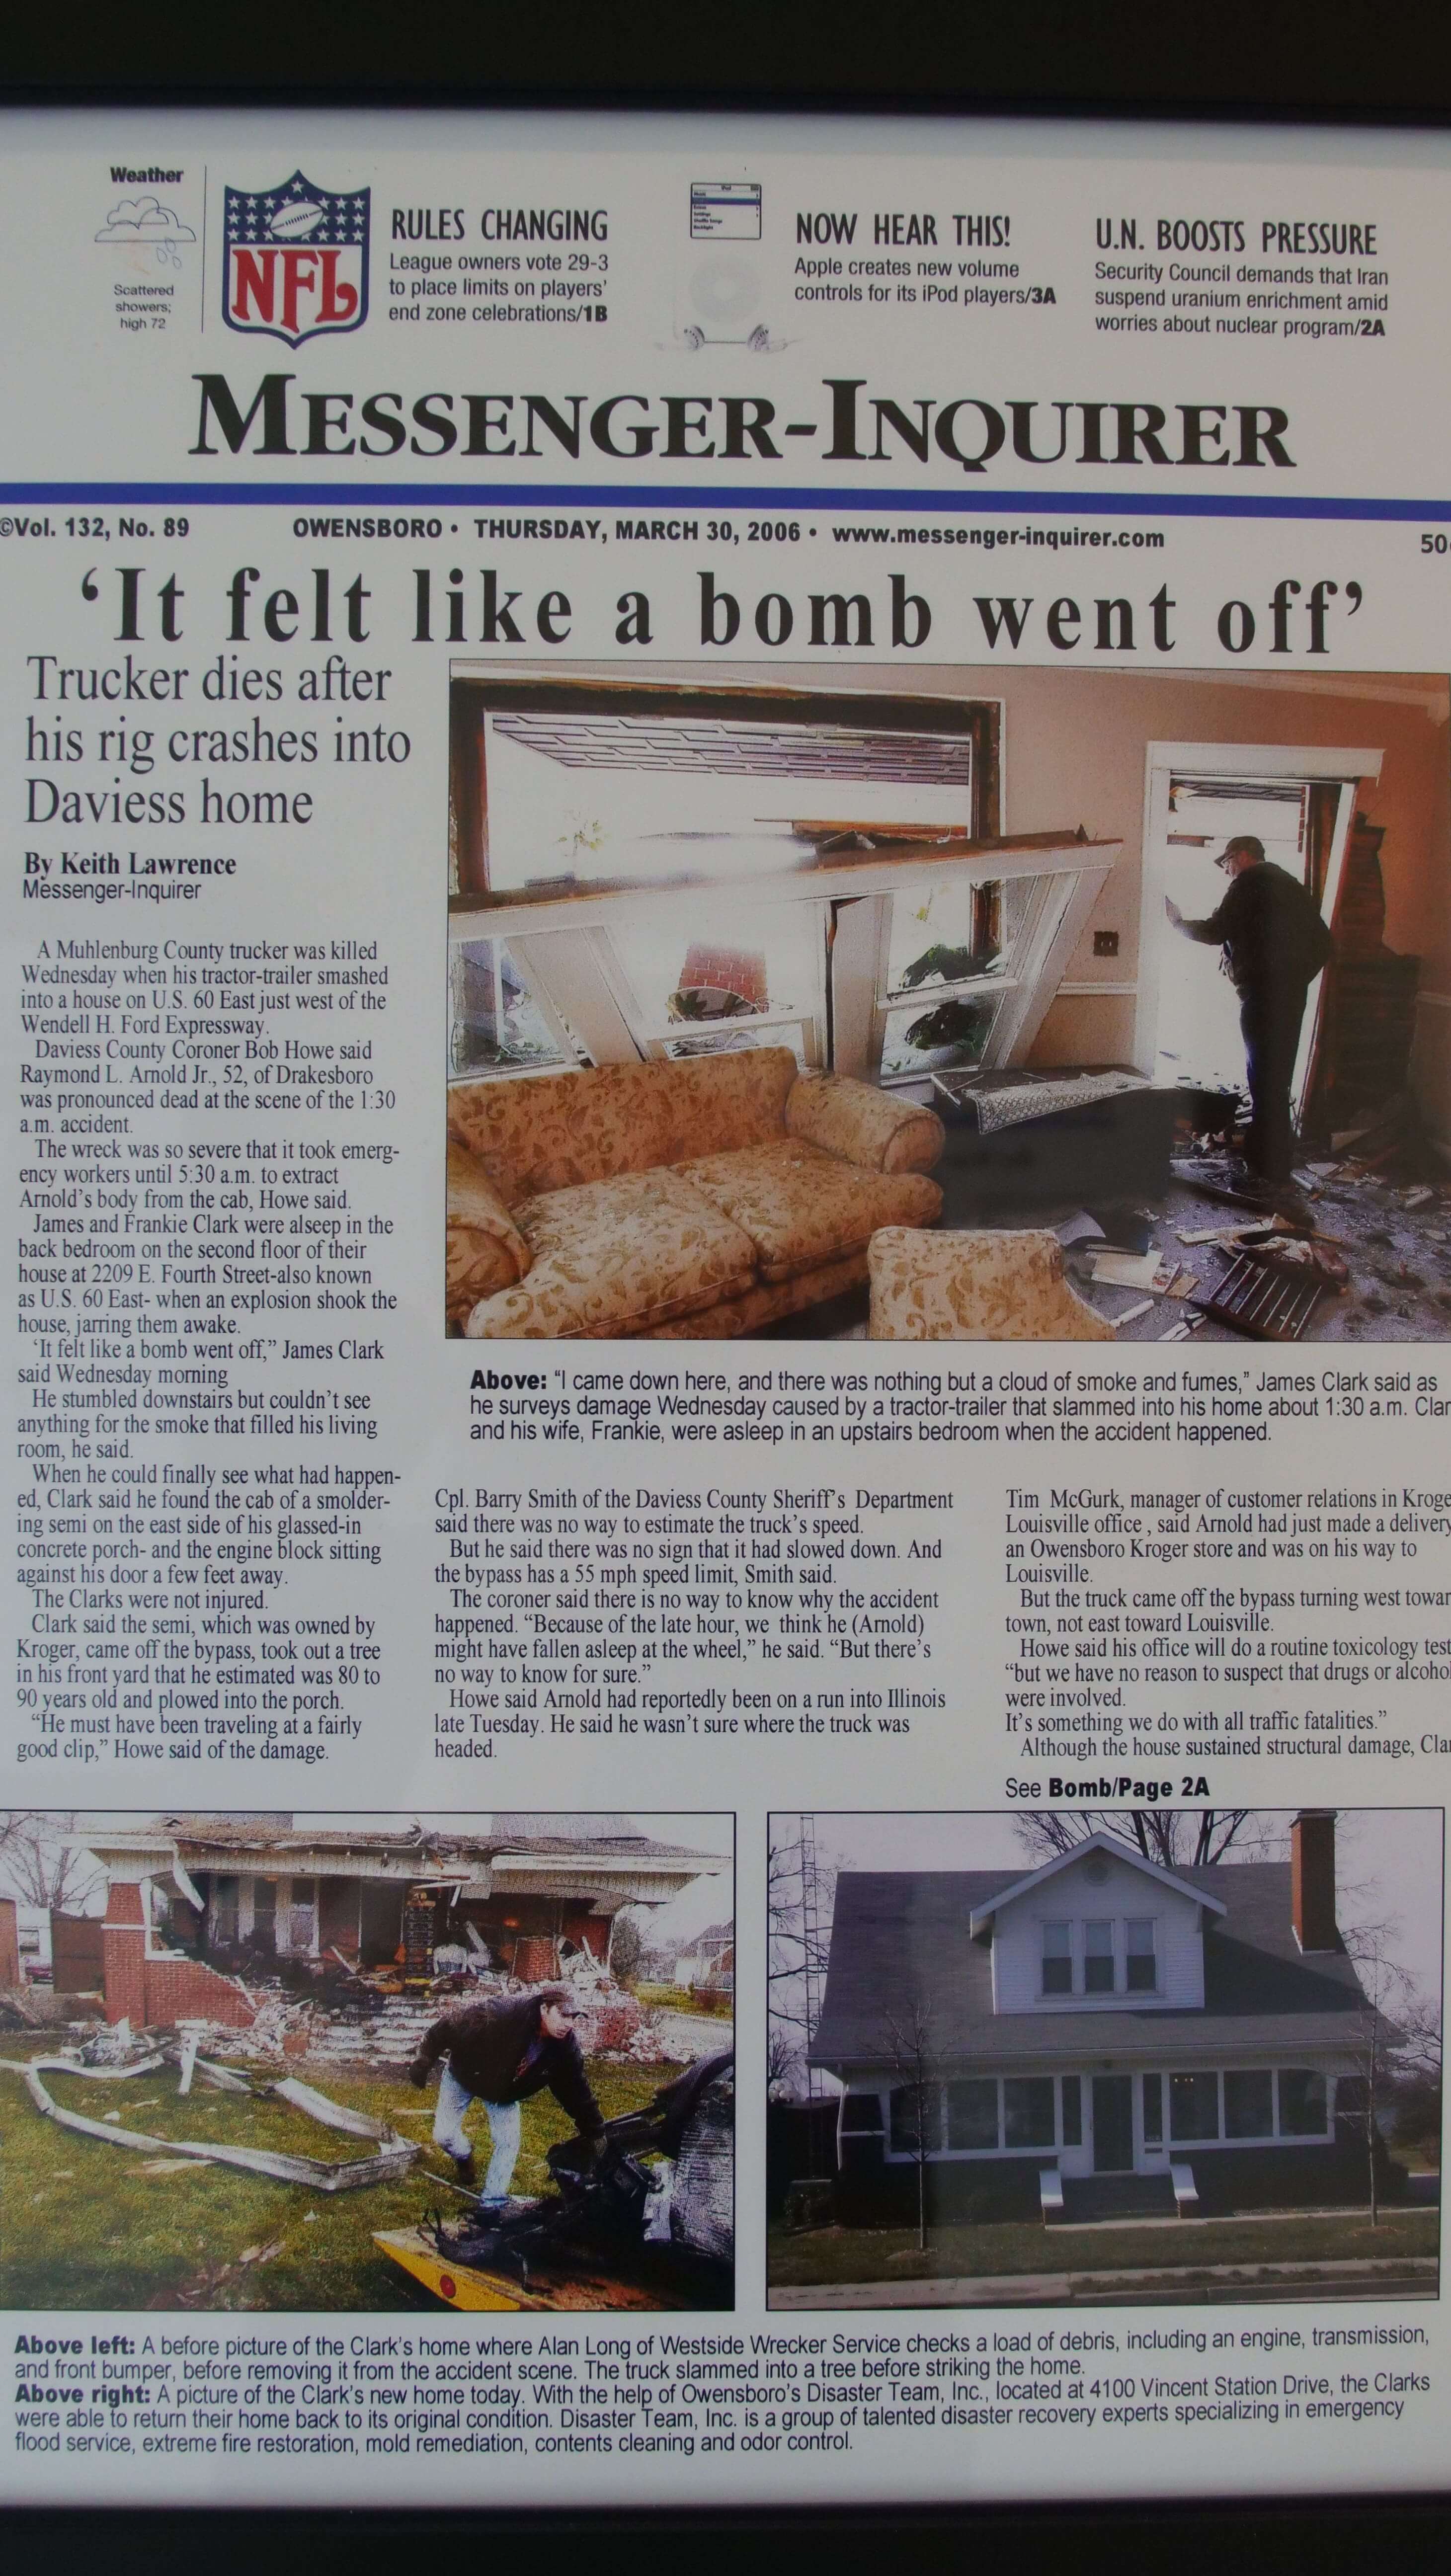 Newspaper showing trucker crashing into house